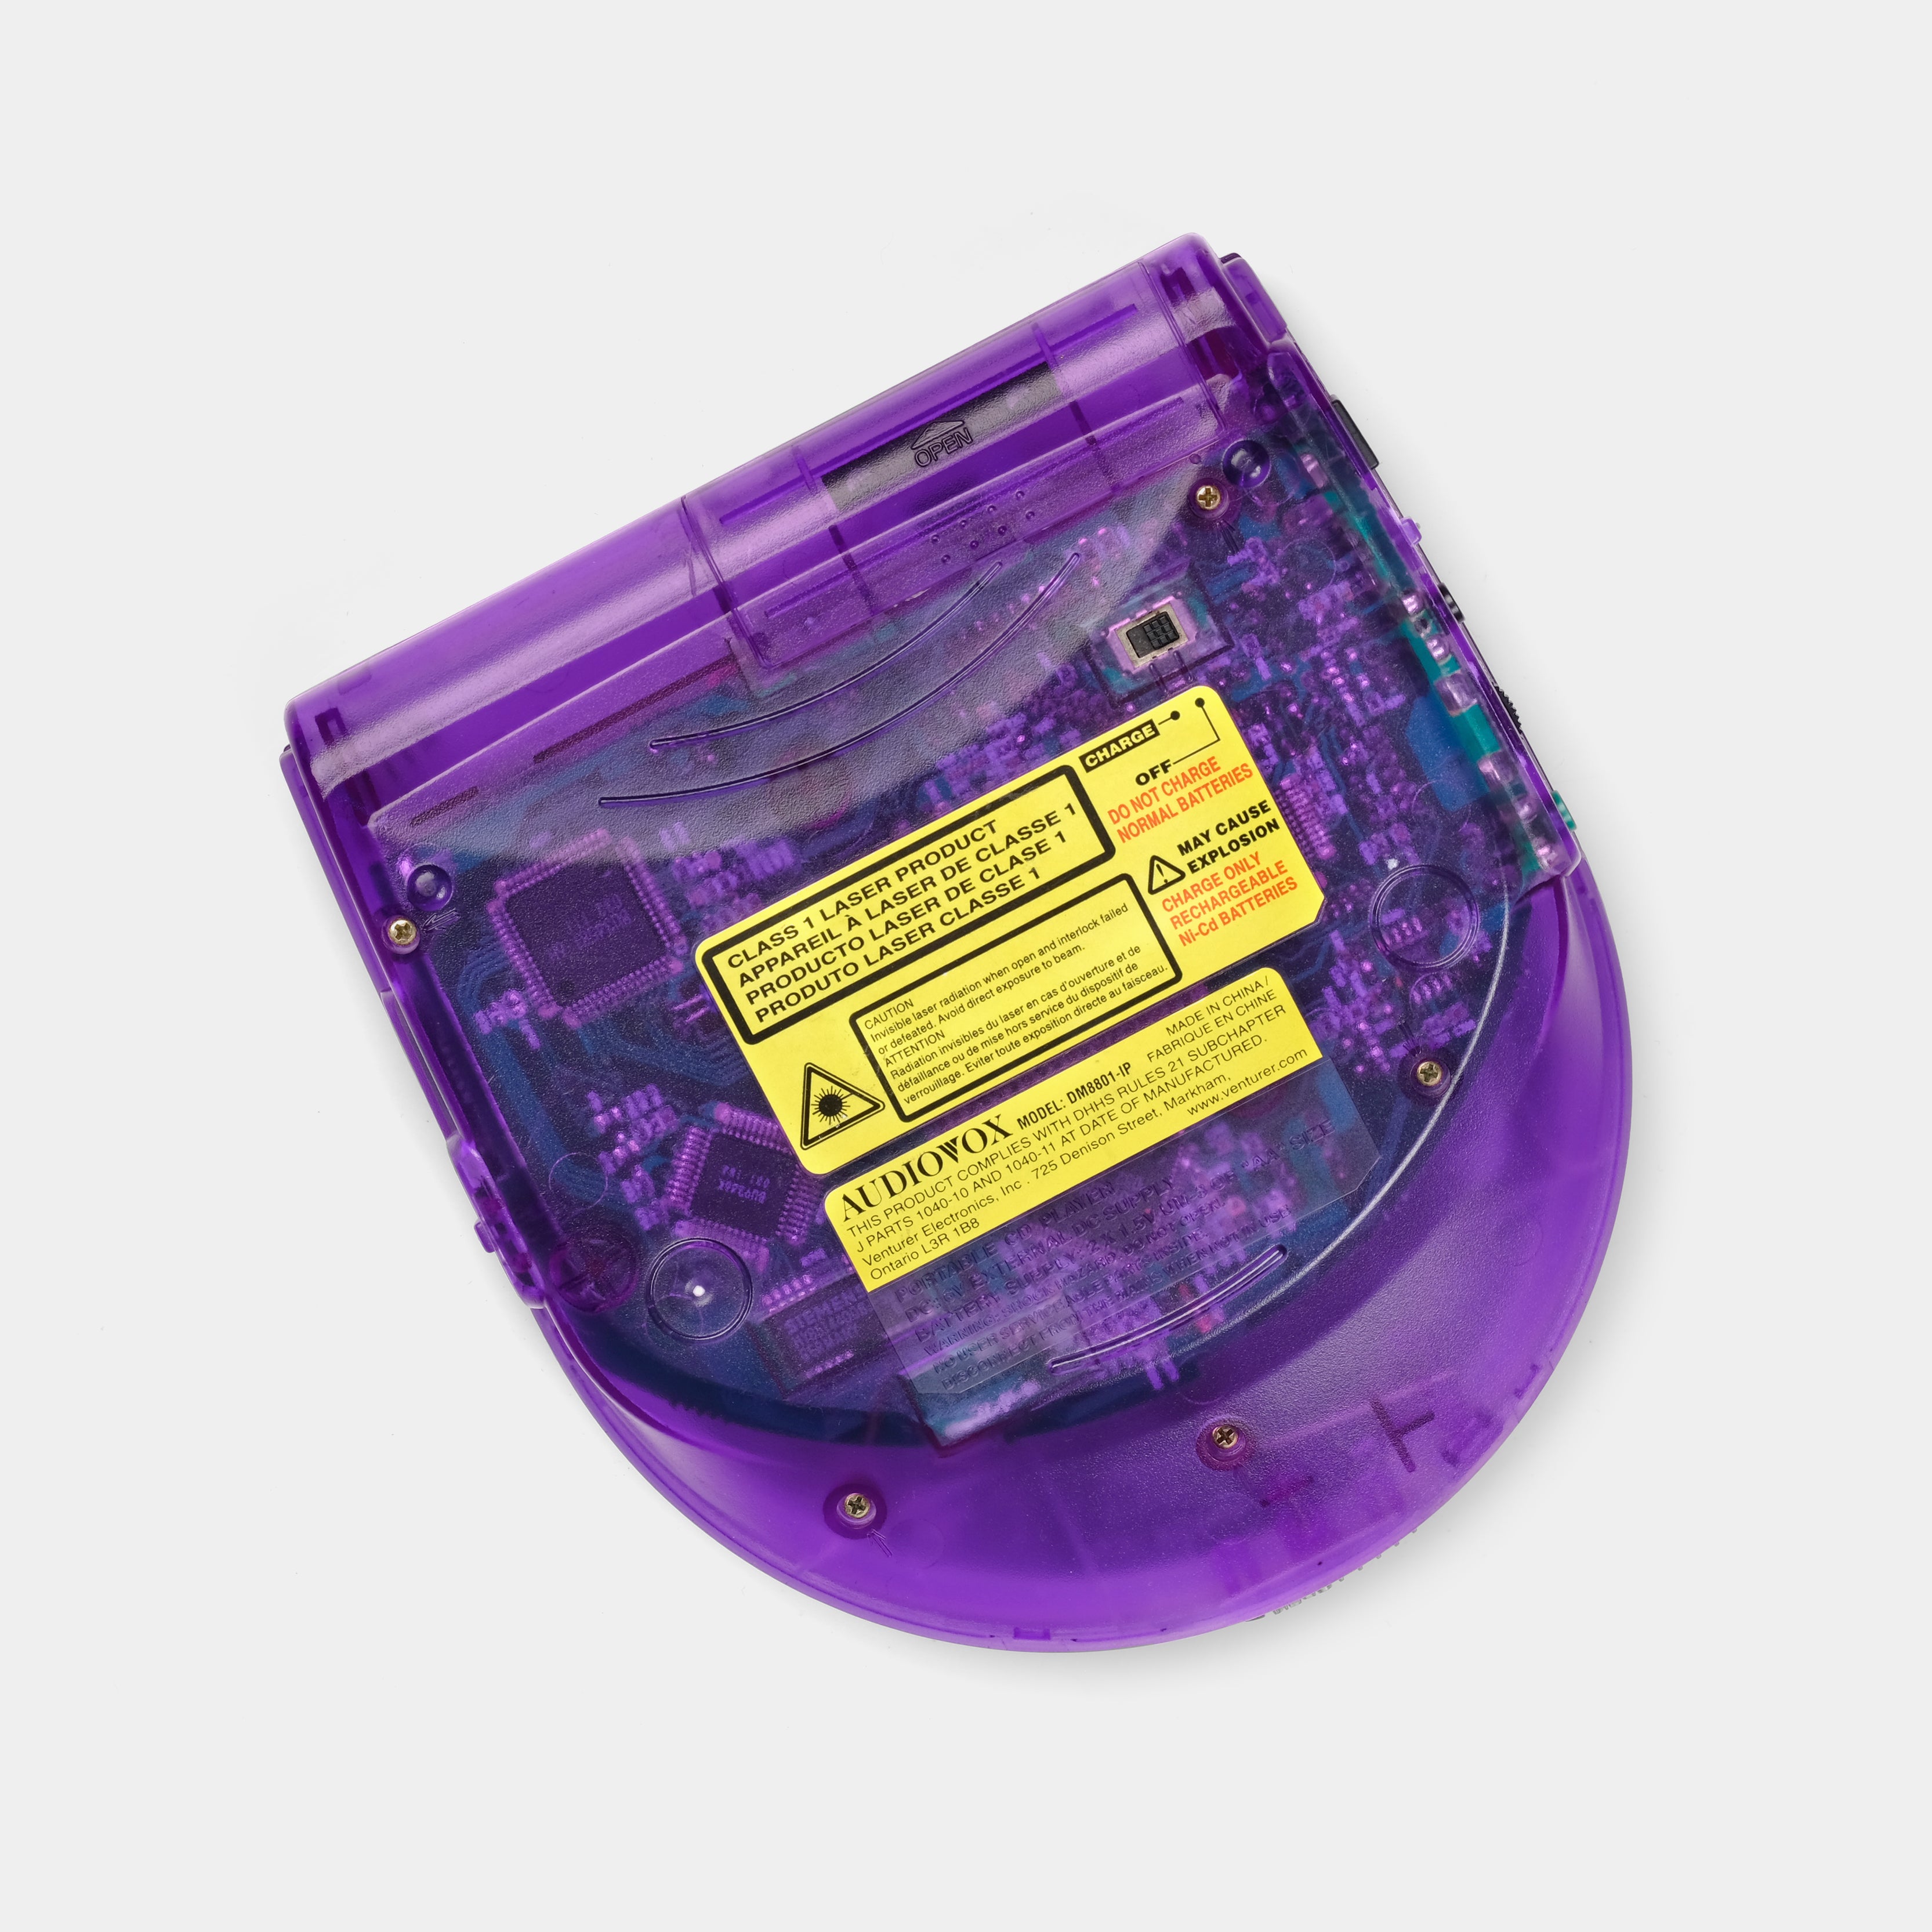 Audiovox Purple DM8801-IP Portable CD Player